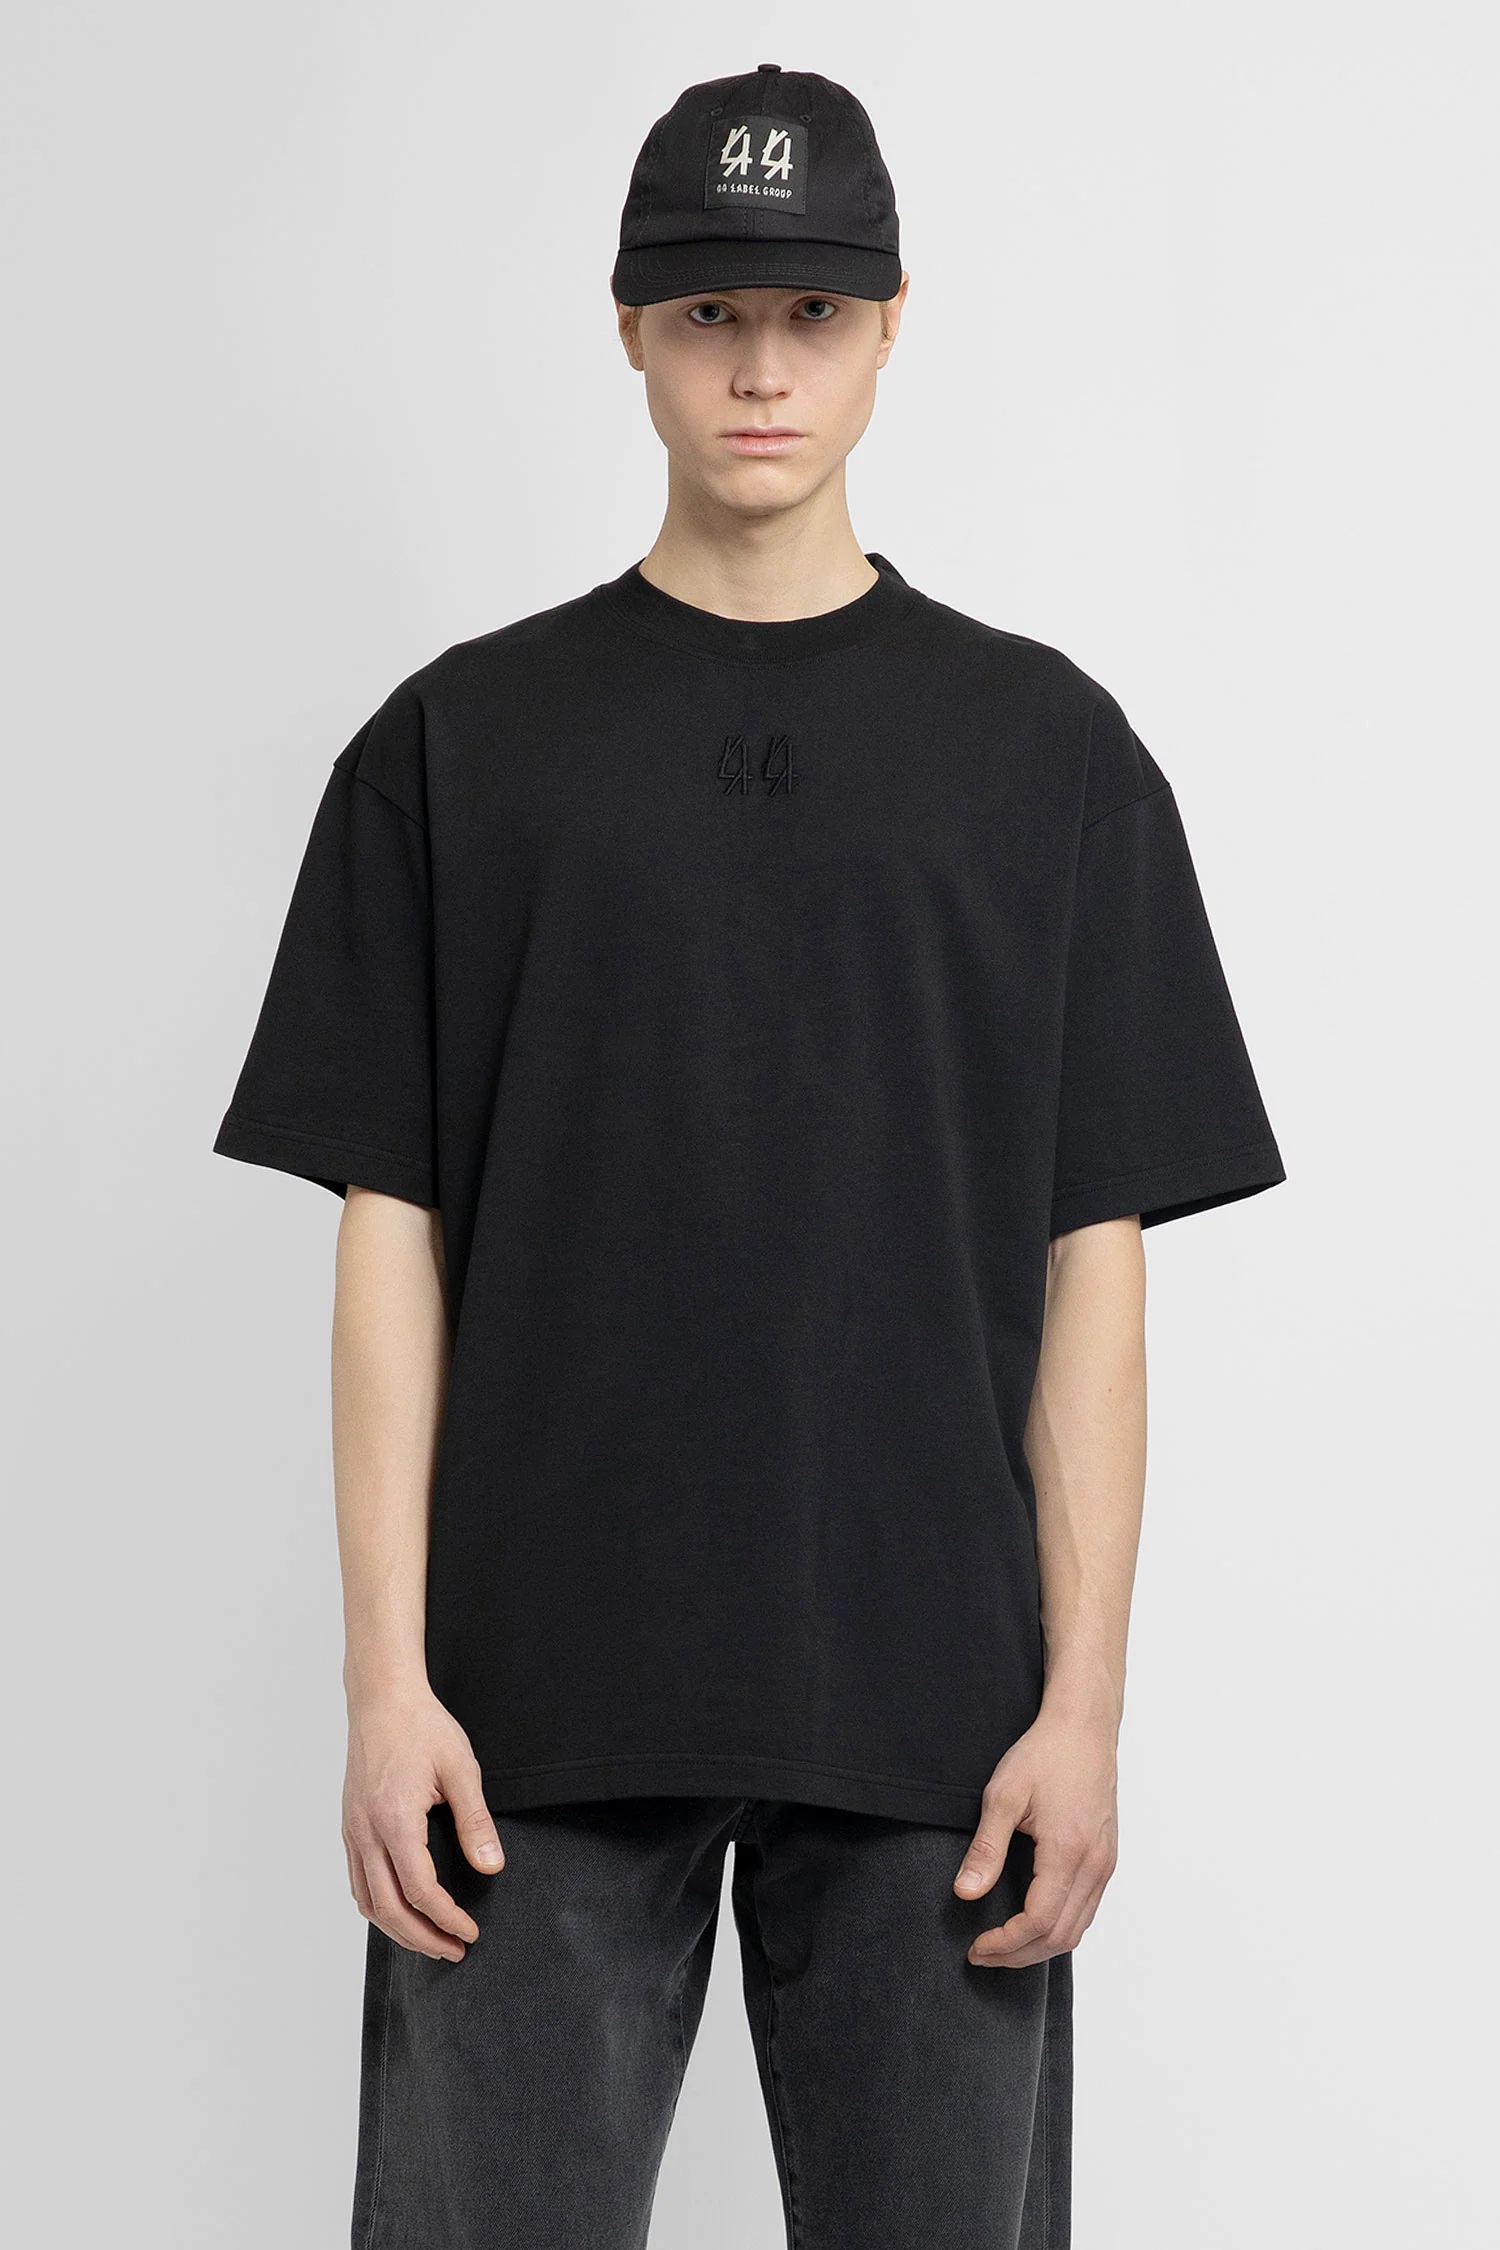 44 Label Group Original T-Shirt in Black/Sand Backprint